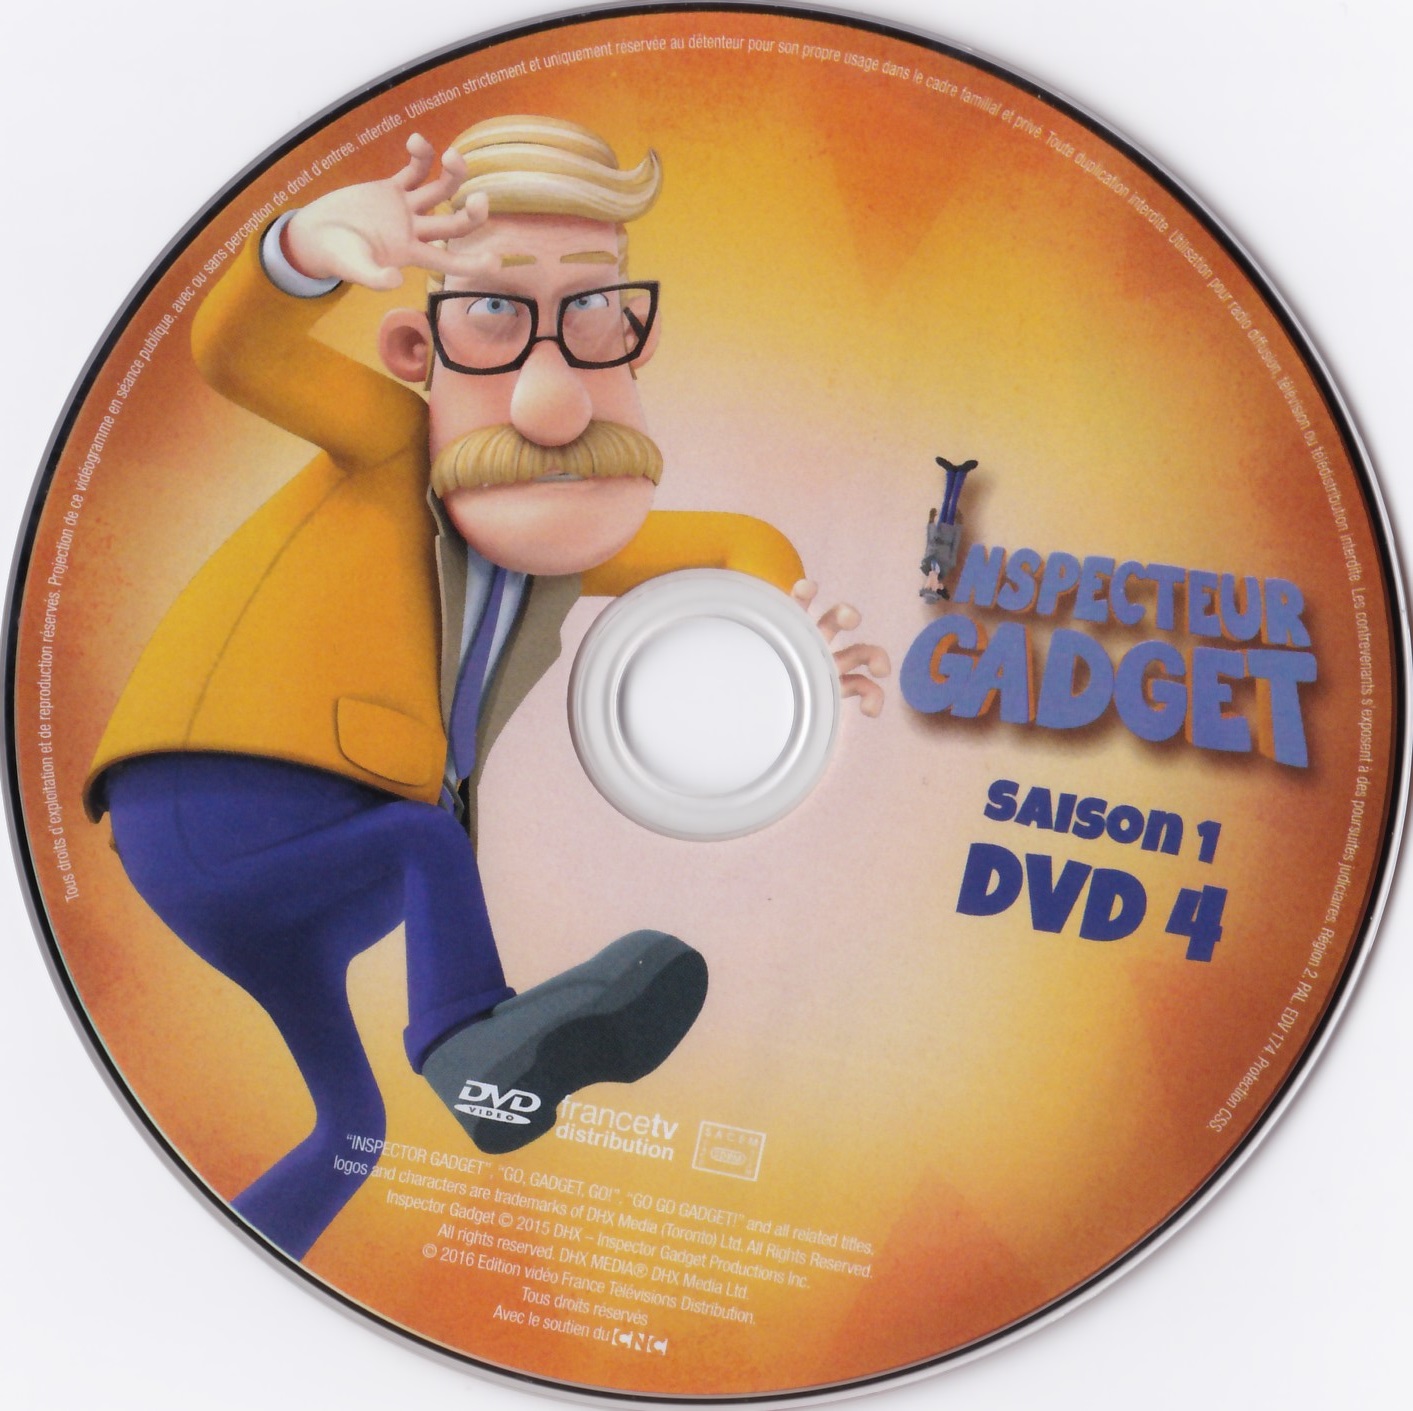 Inspecteur Gadget Saison 1 DISC 4